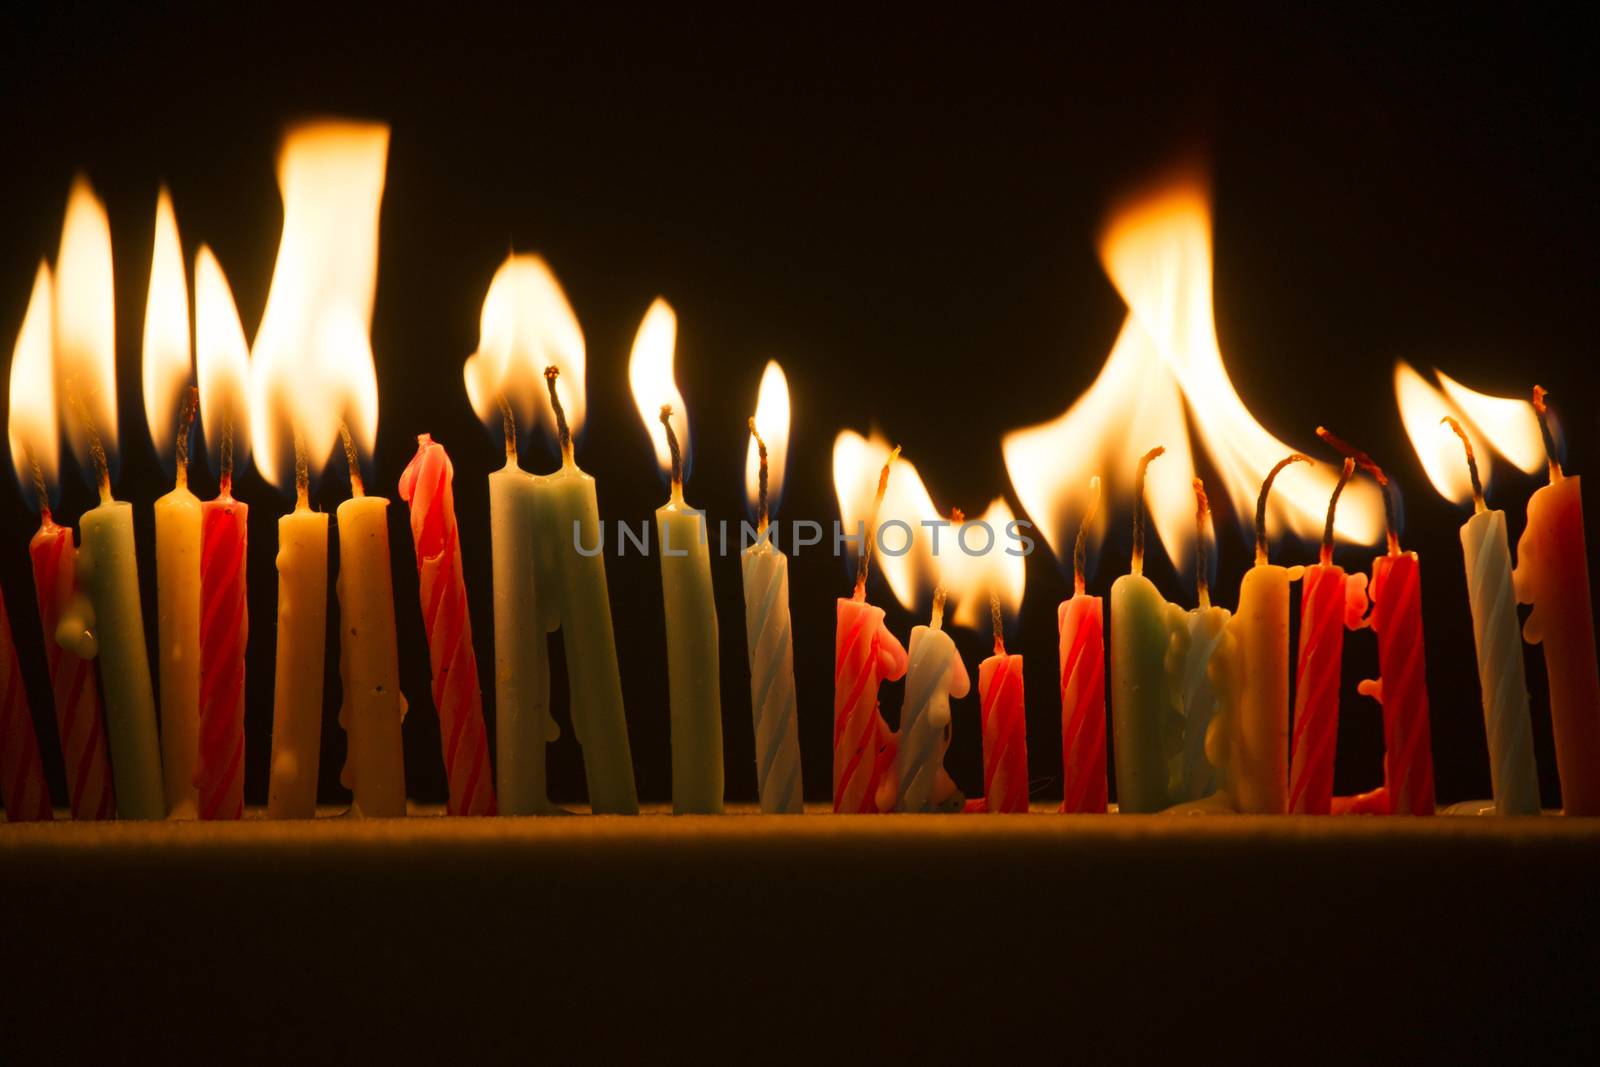 Small candles lit by fotografiche.eu